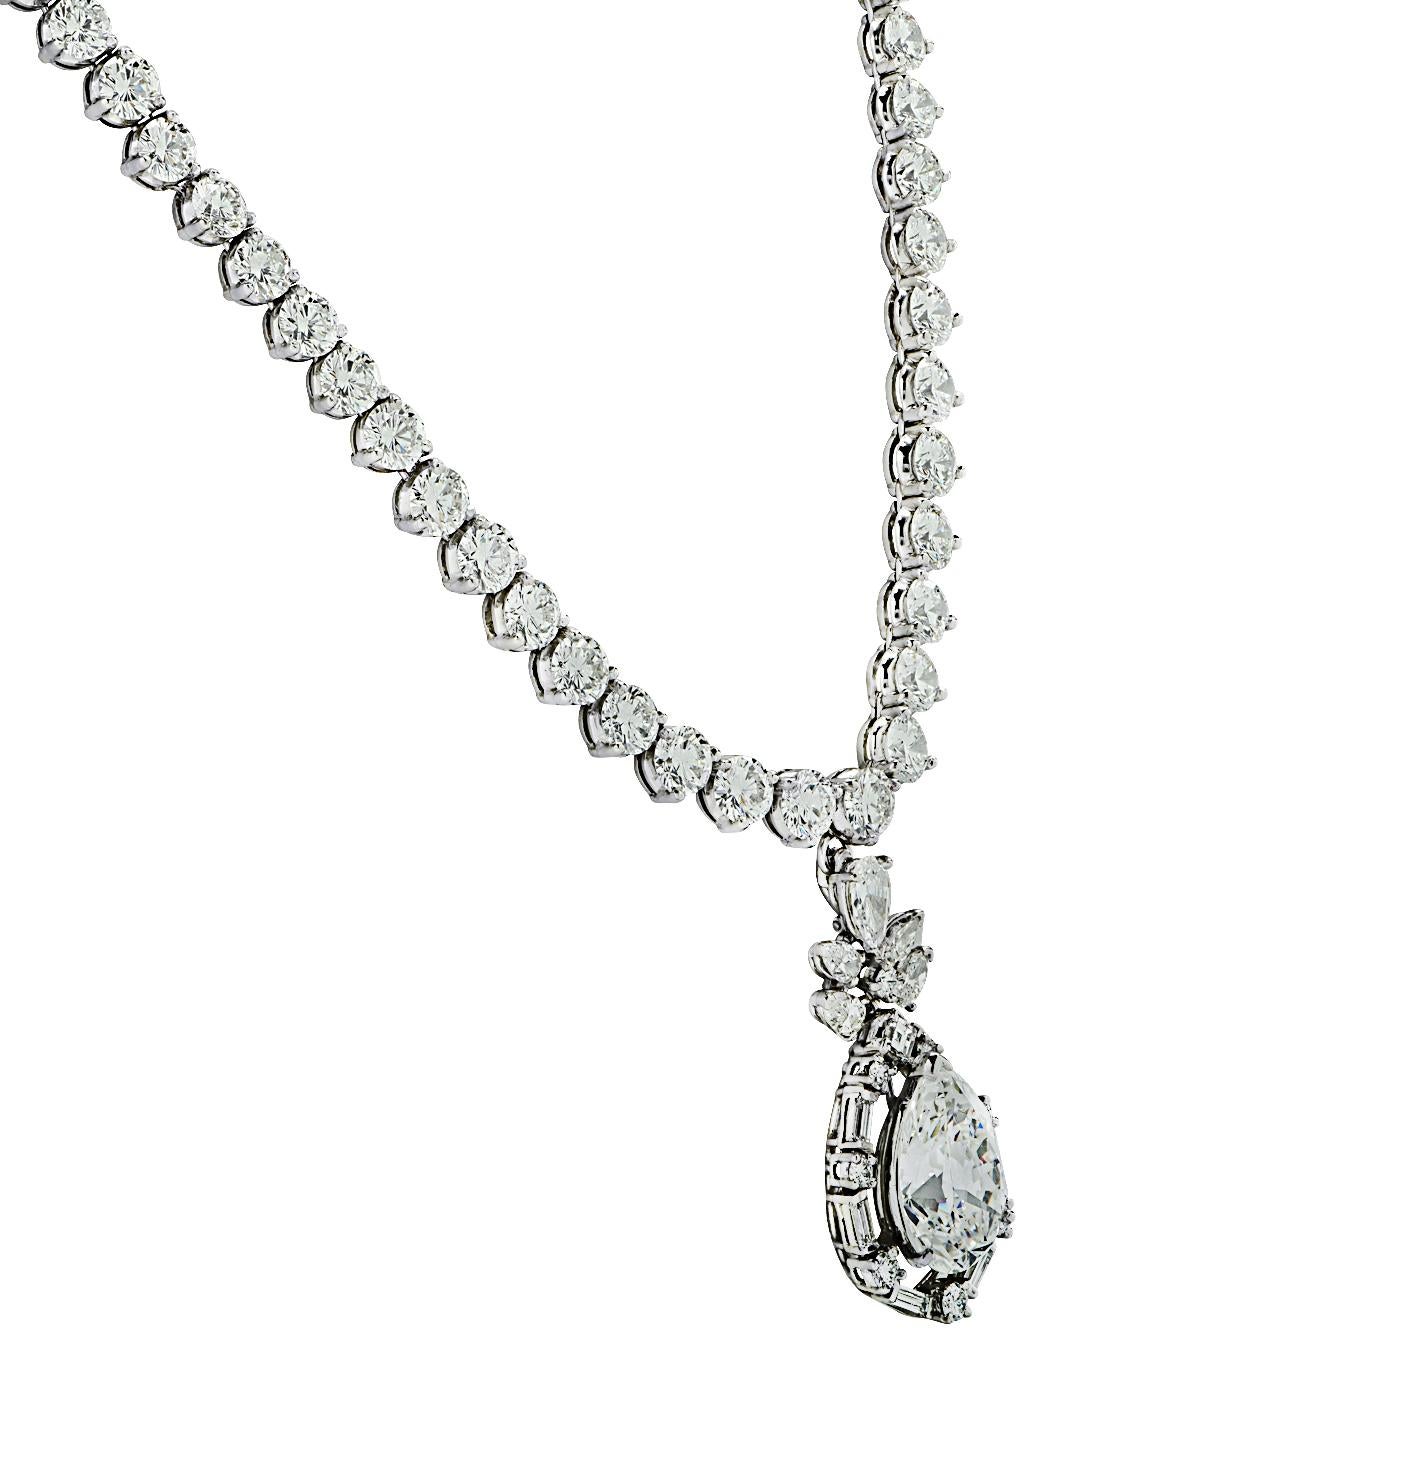 Women's Oscar Heyman 30.92 Carat Diamond Necklace